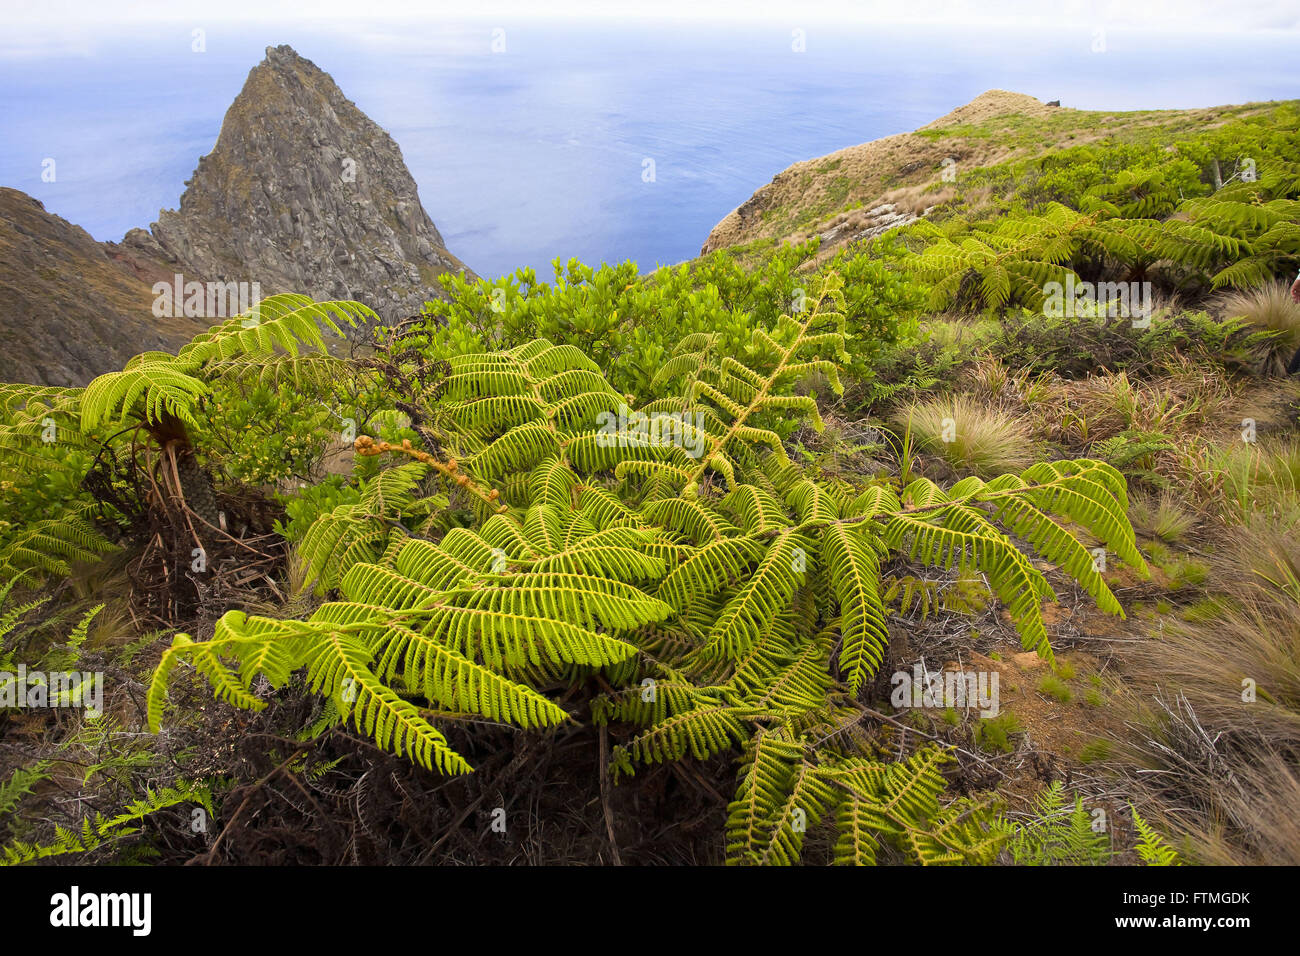 Forest of giant ferns Cyathea copelandii so called encontadada at Trindade Island Stock Photo